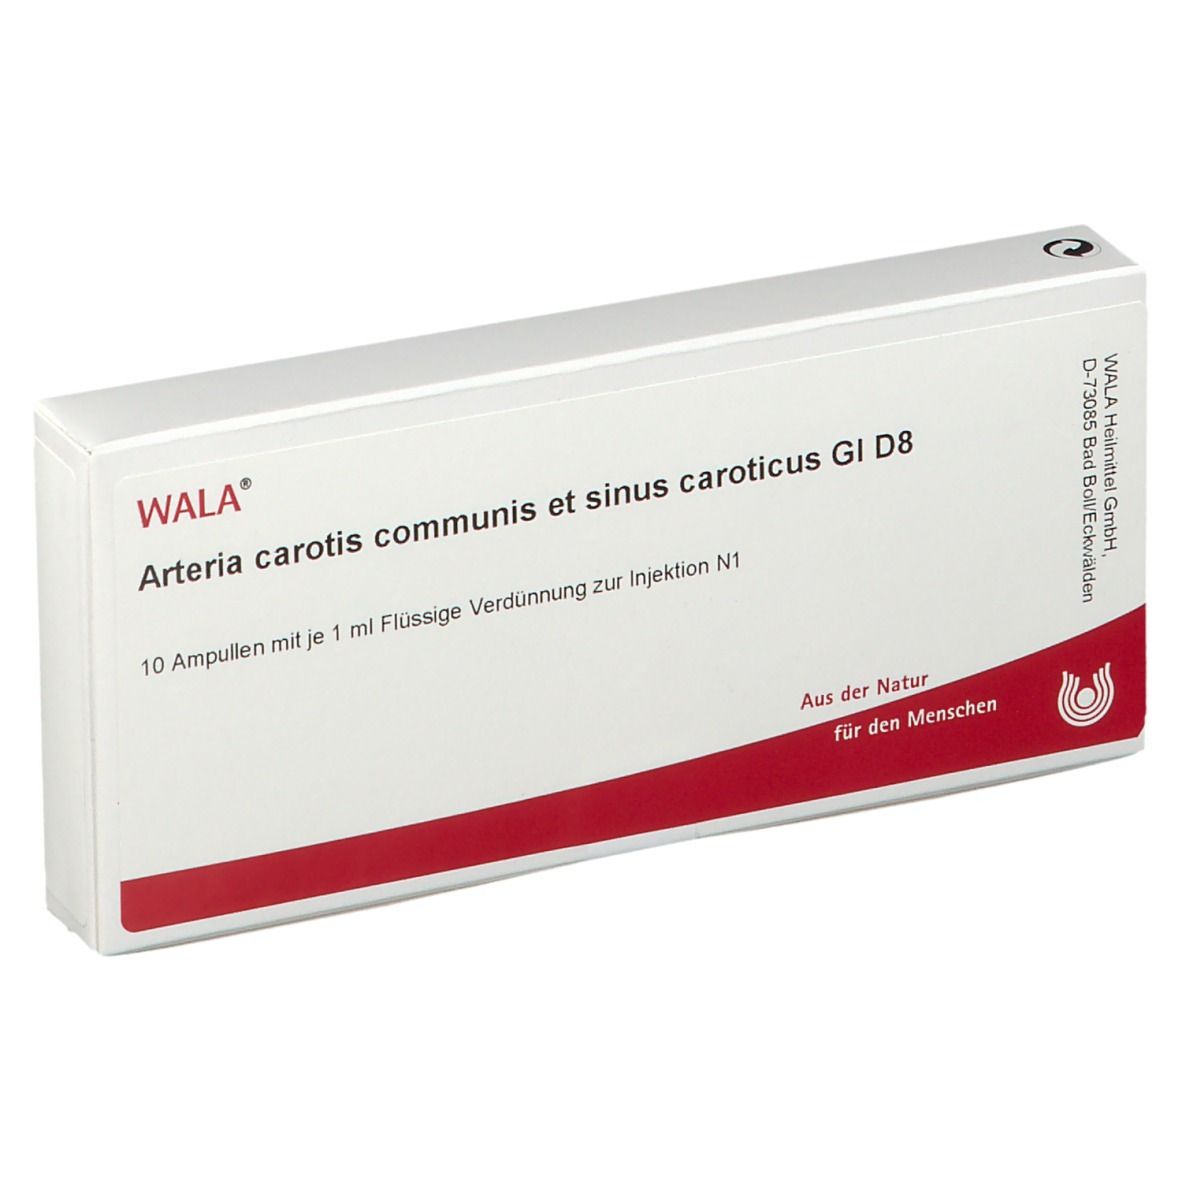 WALA® Arteria carotis communis et sinus caroticus Gl D 8